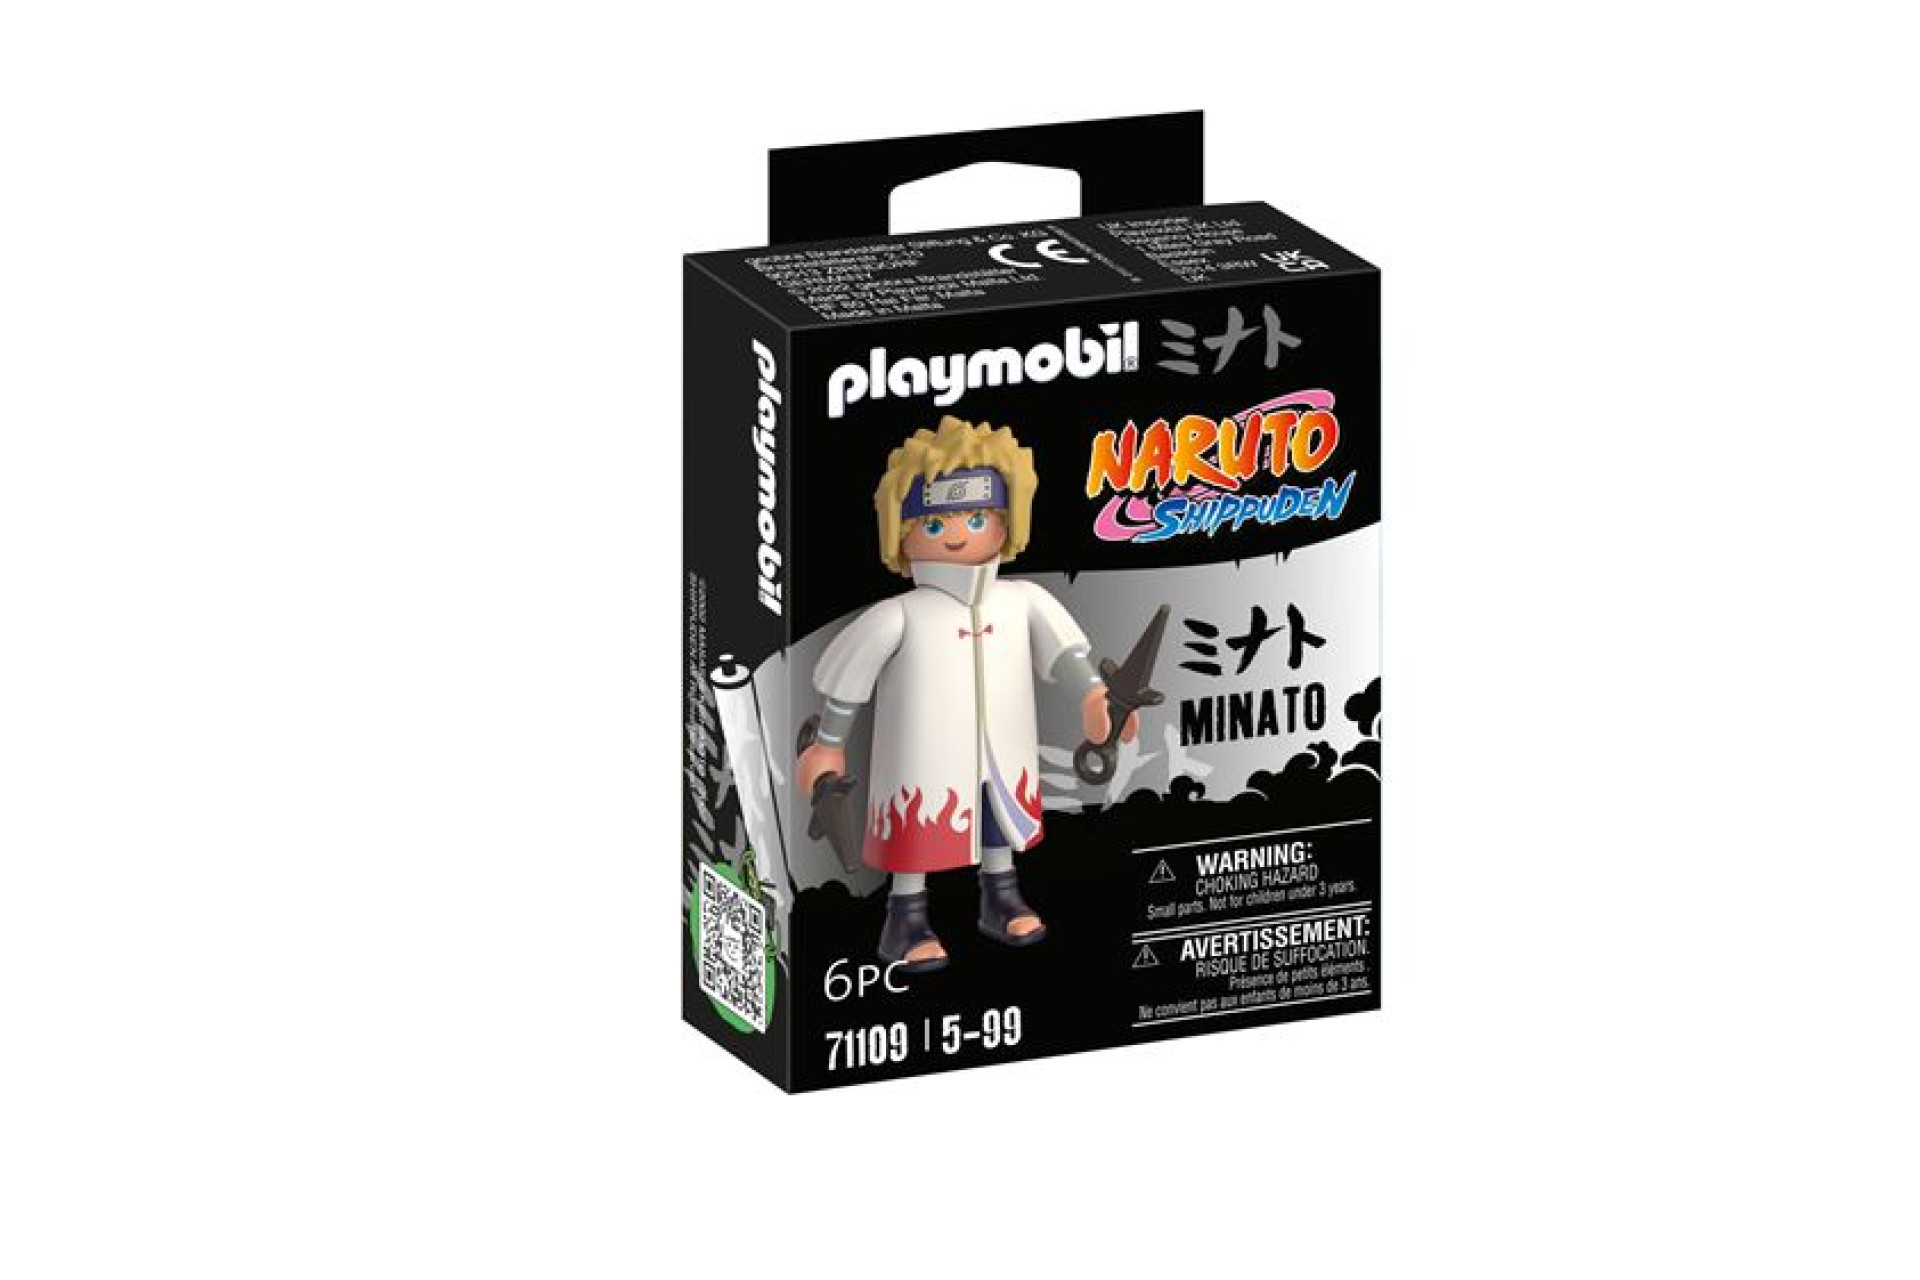 Acheter Playmobil Naruto 71109 Minato